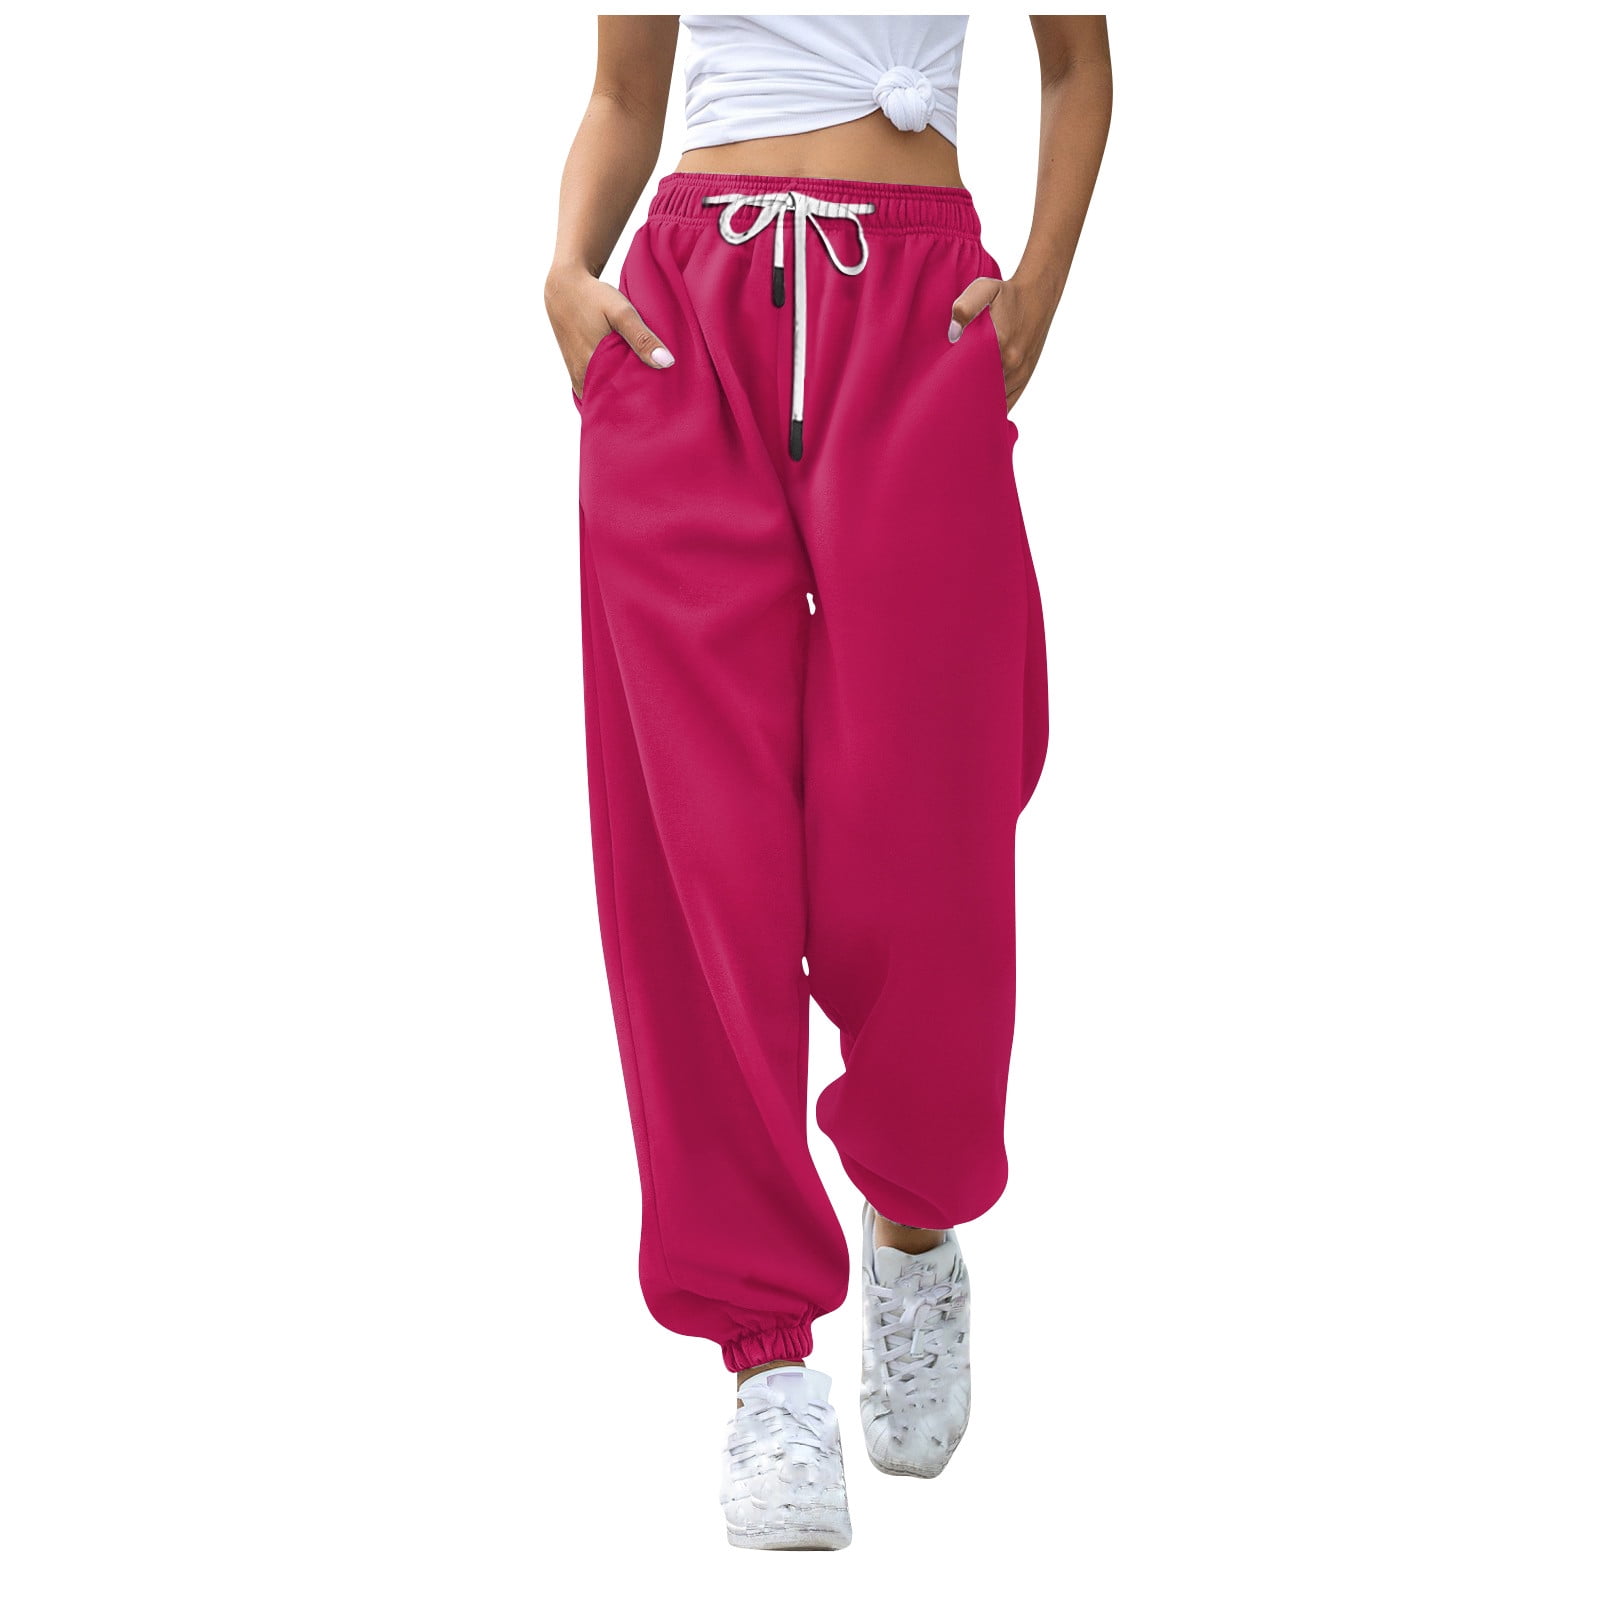 TQWQT Women's Cinch Bottom Sweatpants Pockets High Waist Sporty Gym  Athletic Fit Jogger Pants Lounge Trousers Light Blue L